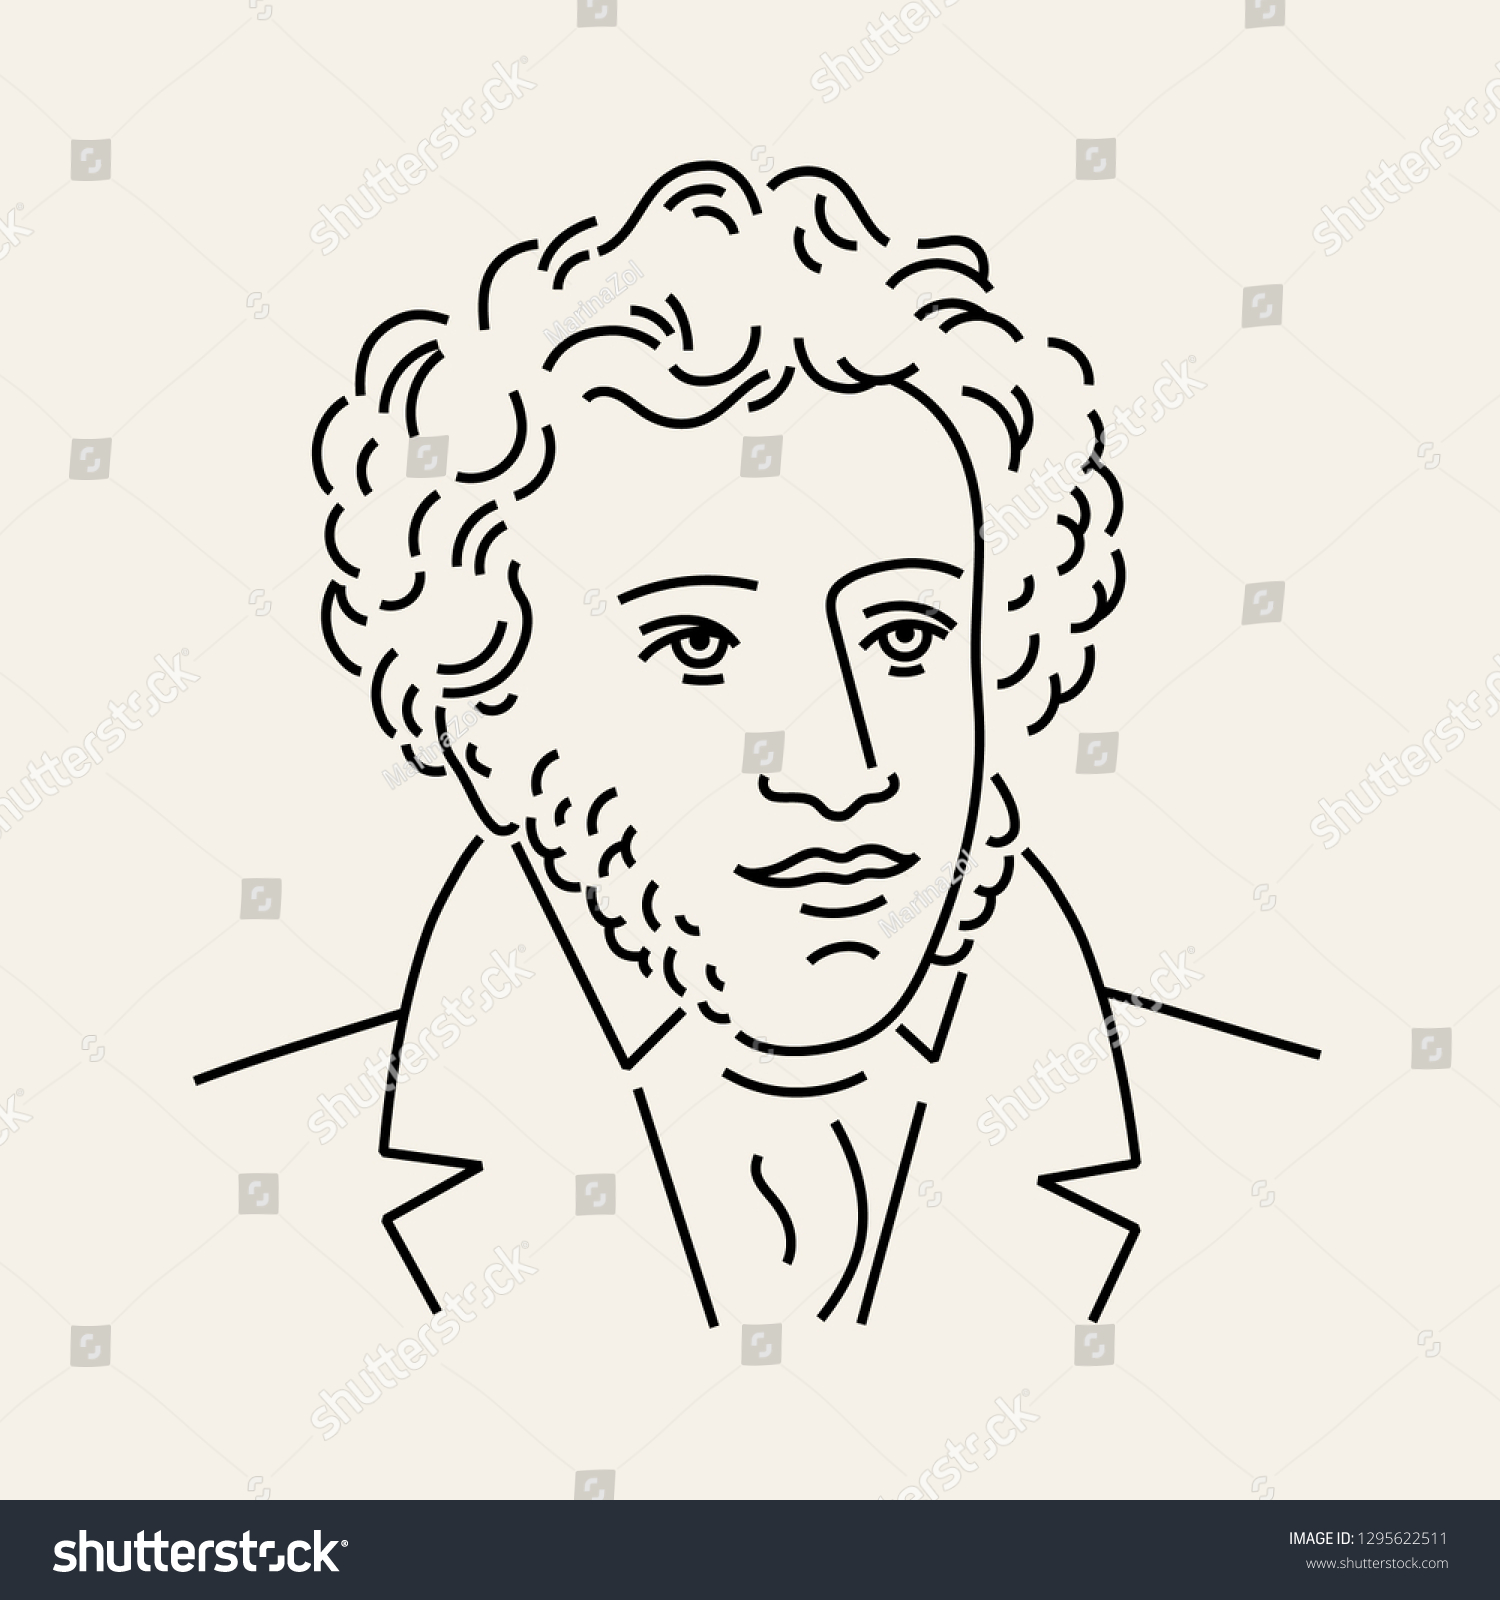 Легкий портрет Александра Сергеевича Пушкина